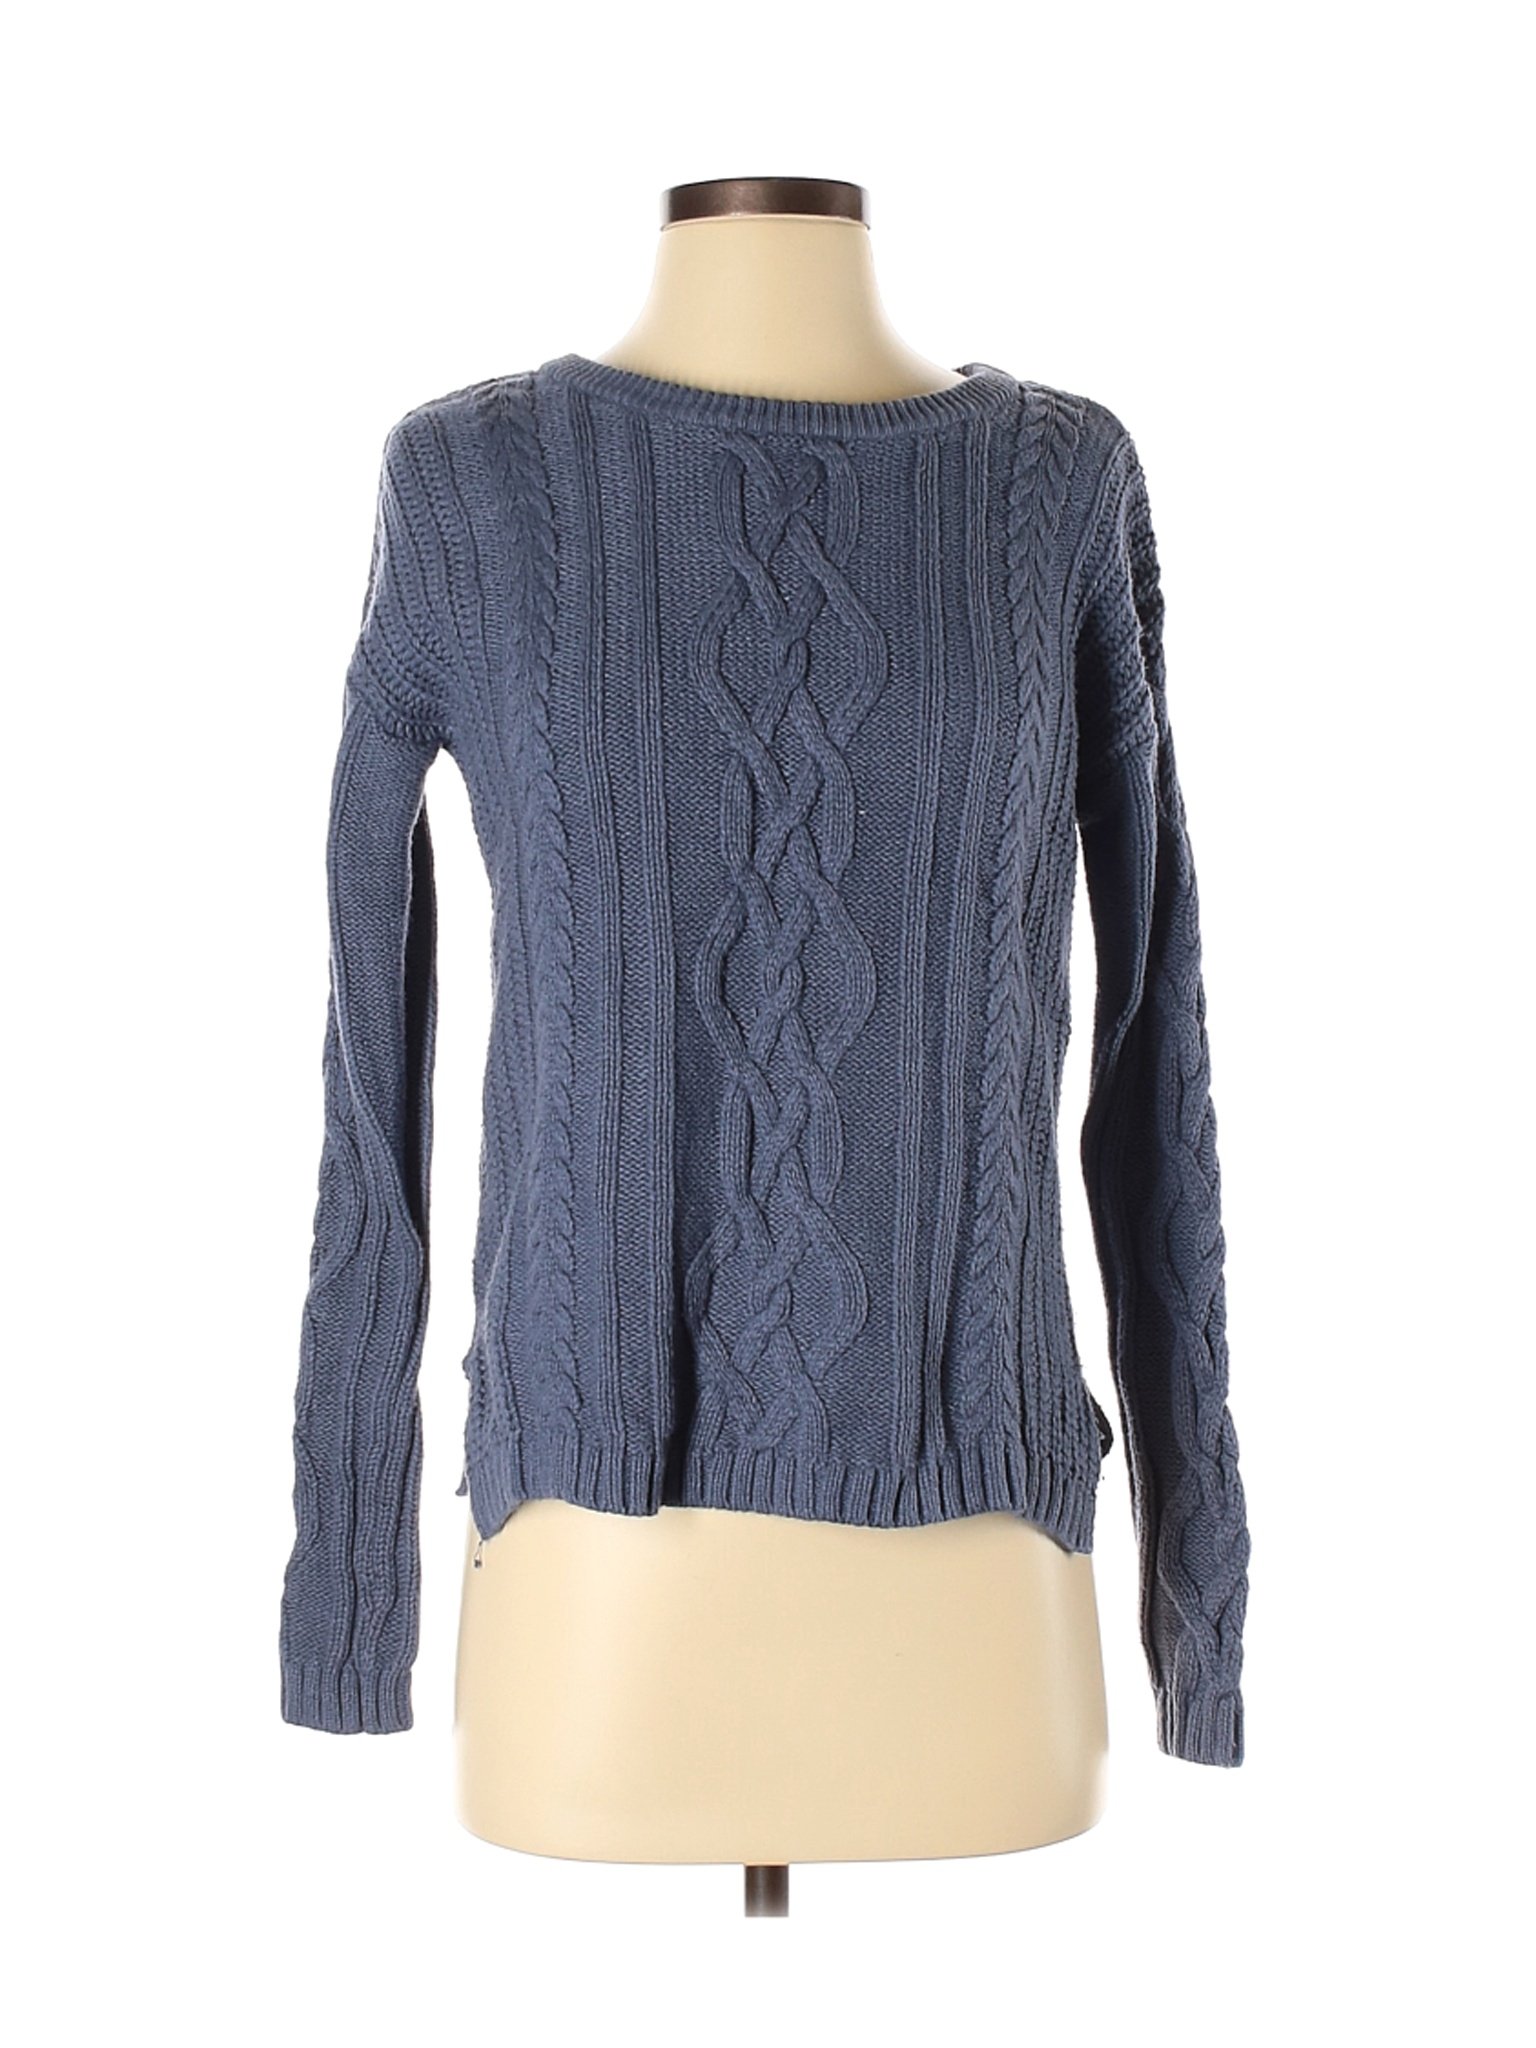 Old Navy Women Blue Pullover Sweater S | eBay